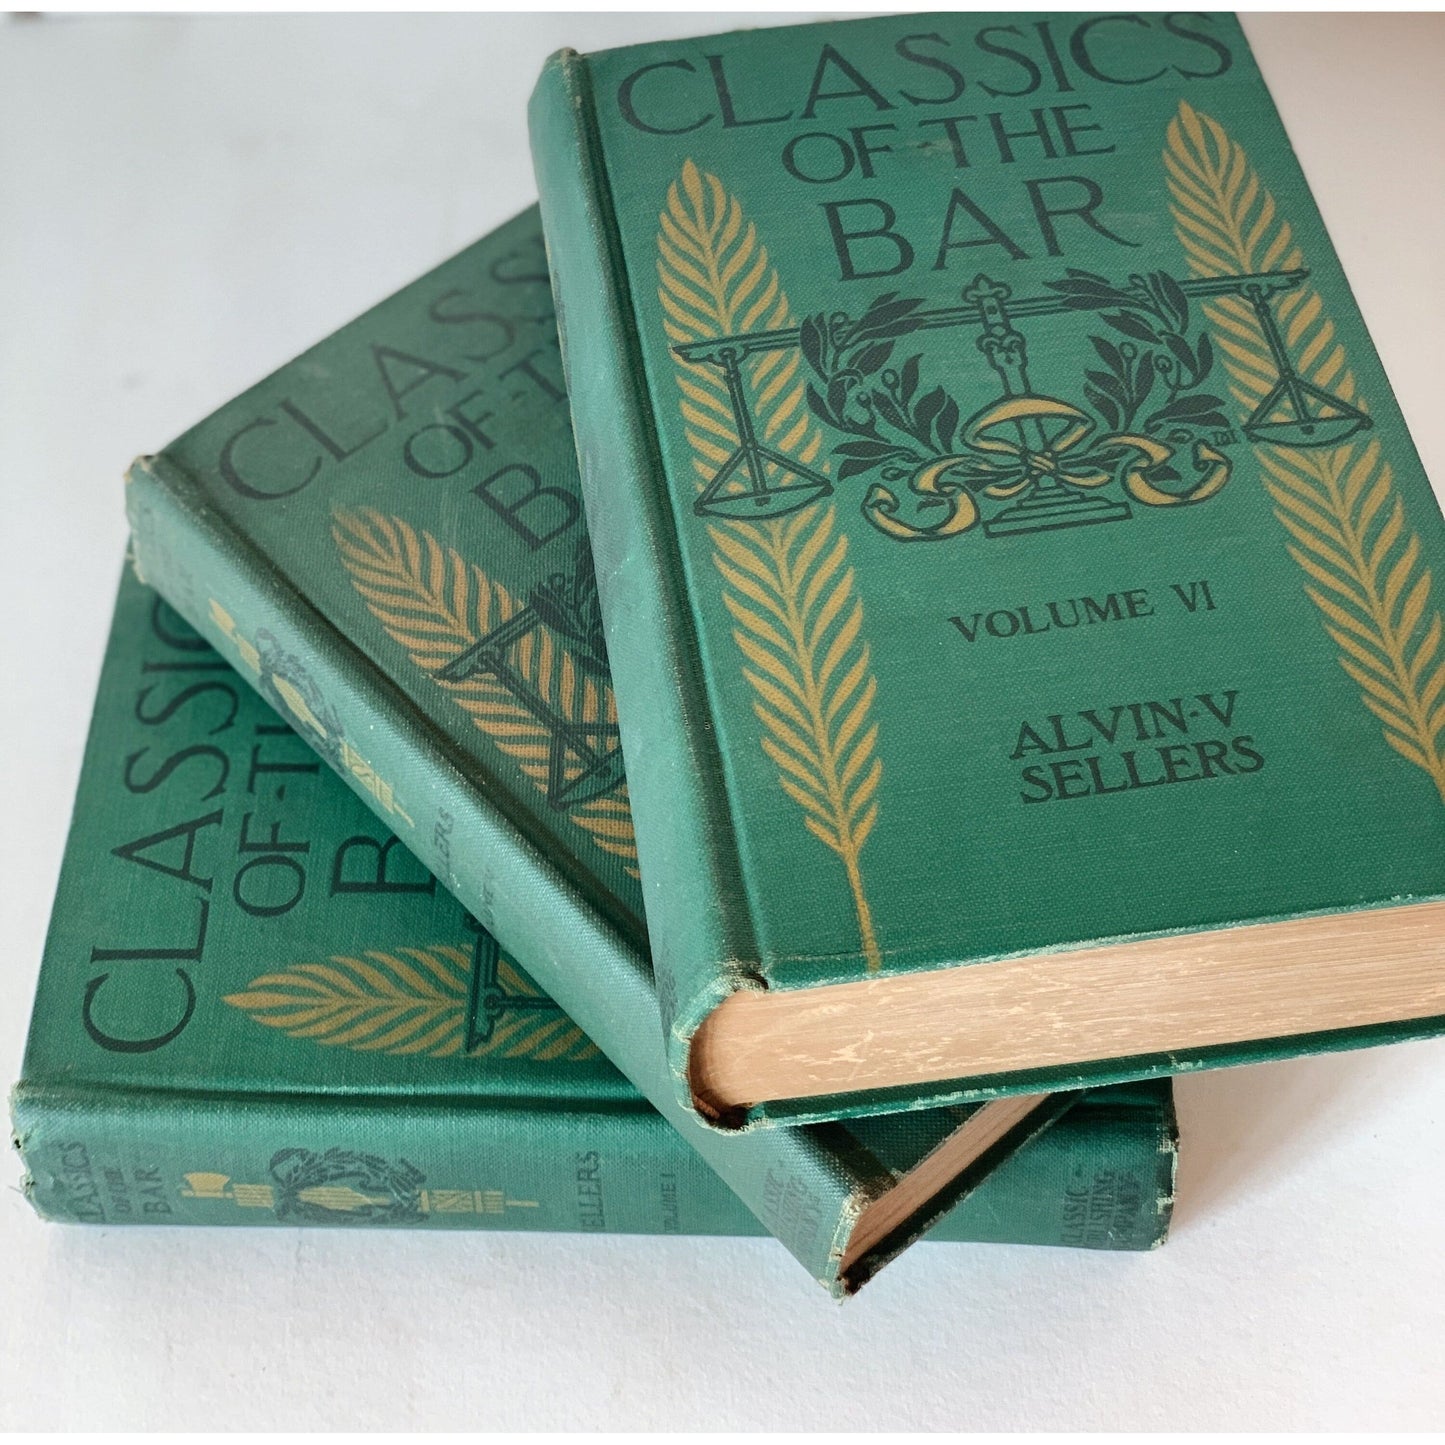 Vintage Olive Green and Black Books for Bookshelf Decor, Classics of the Bar, 1920